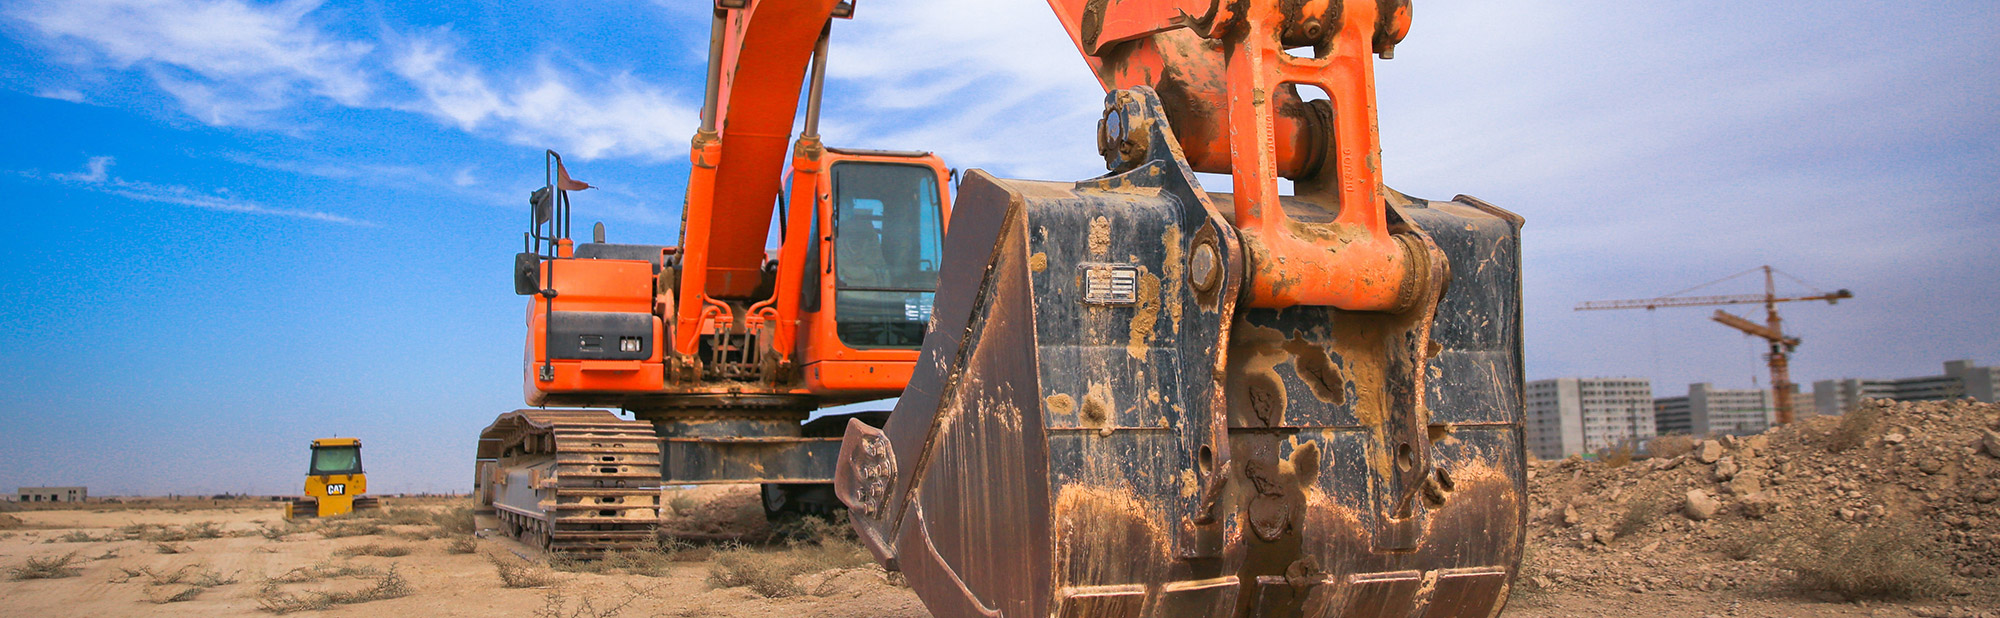 Image of an excavator digging